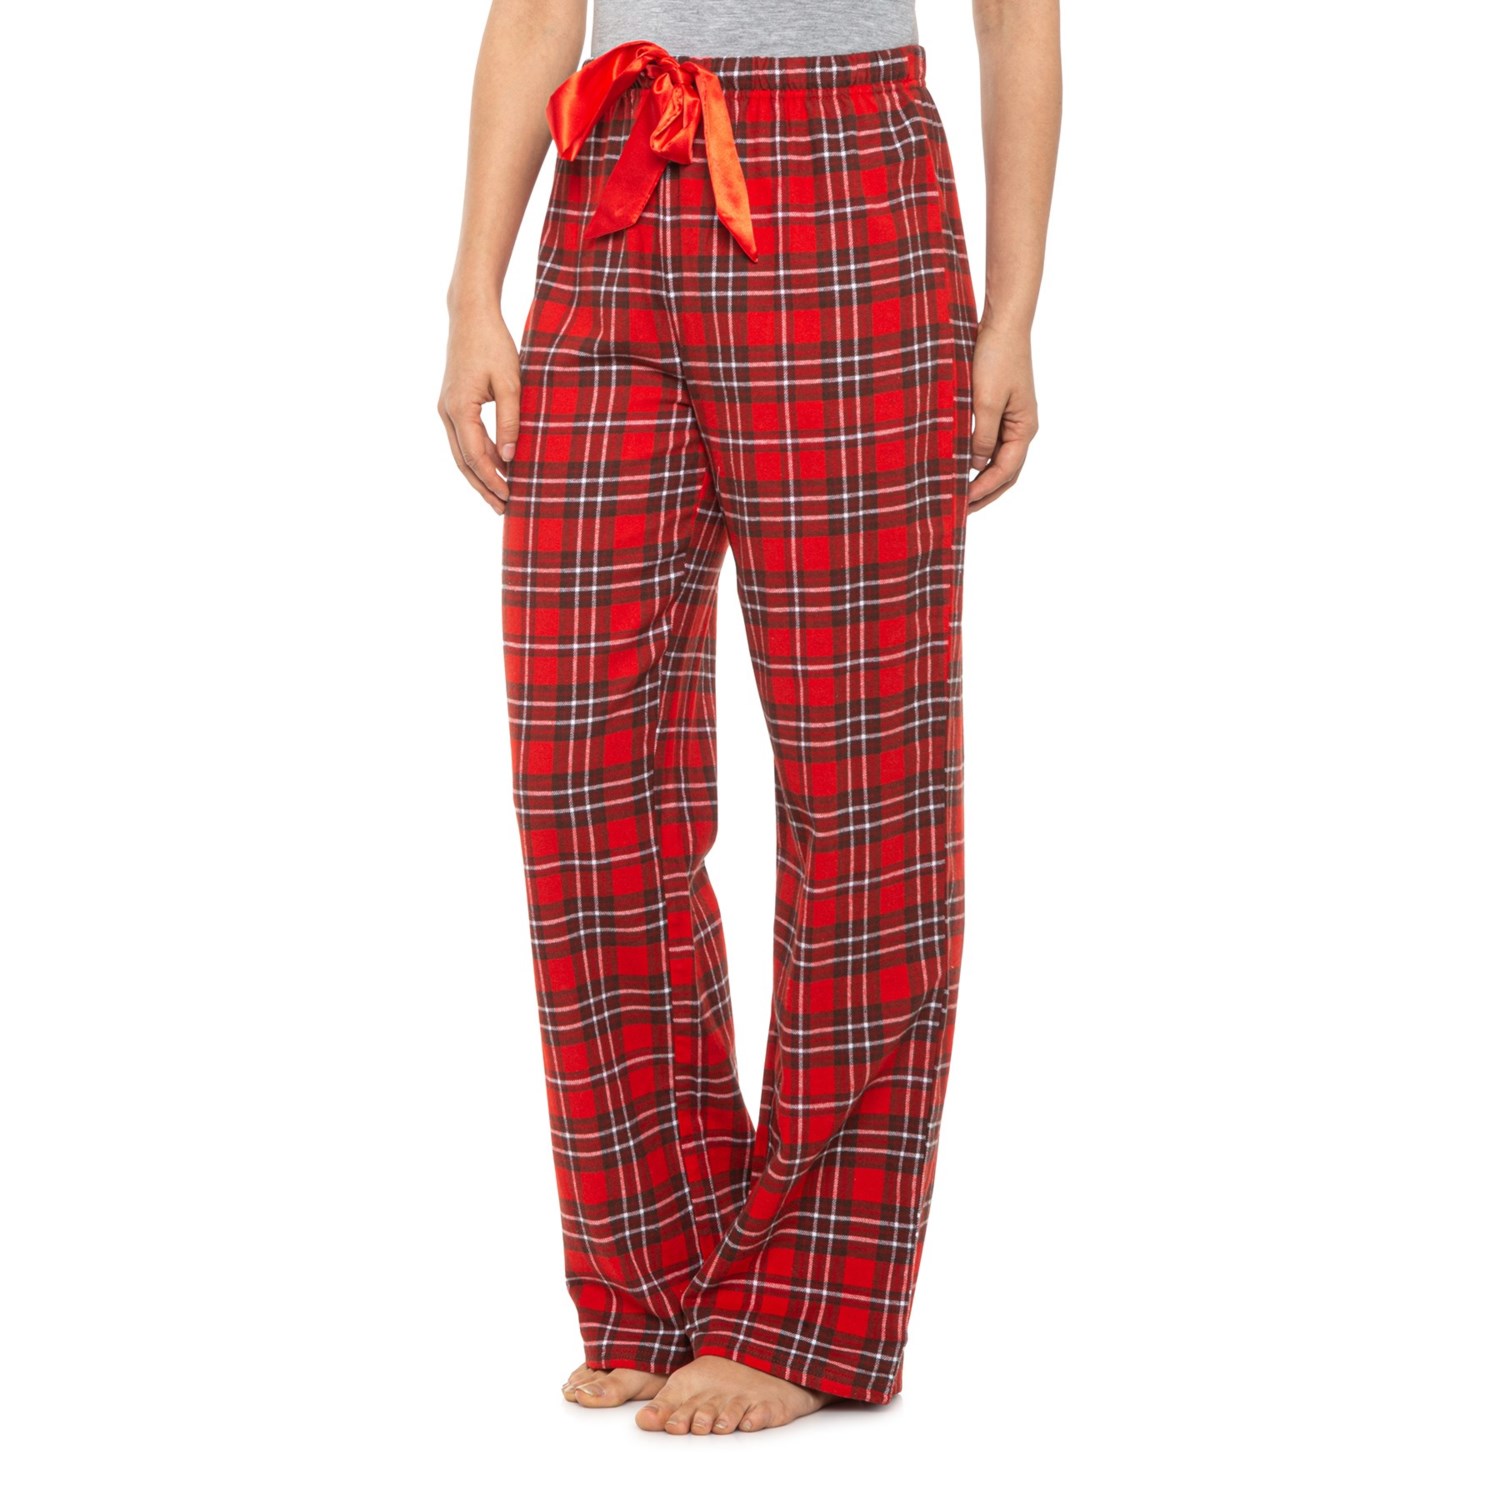 Aspen Red Tartan Flannel Sleep Joggers (For Women) - Save 38%